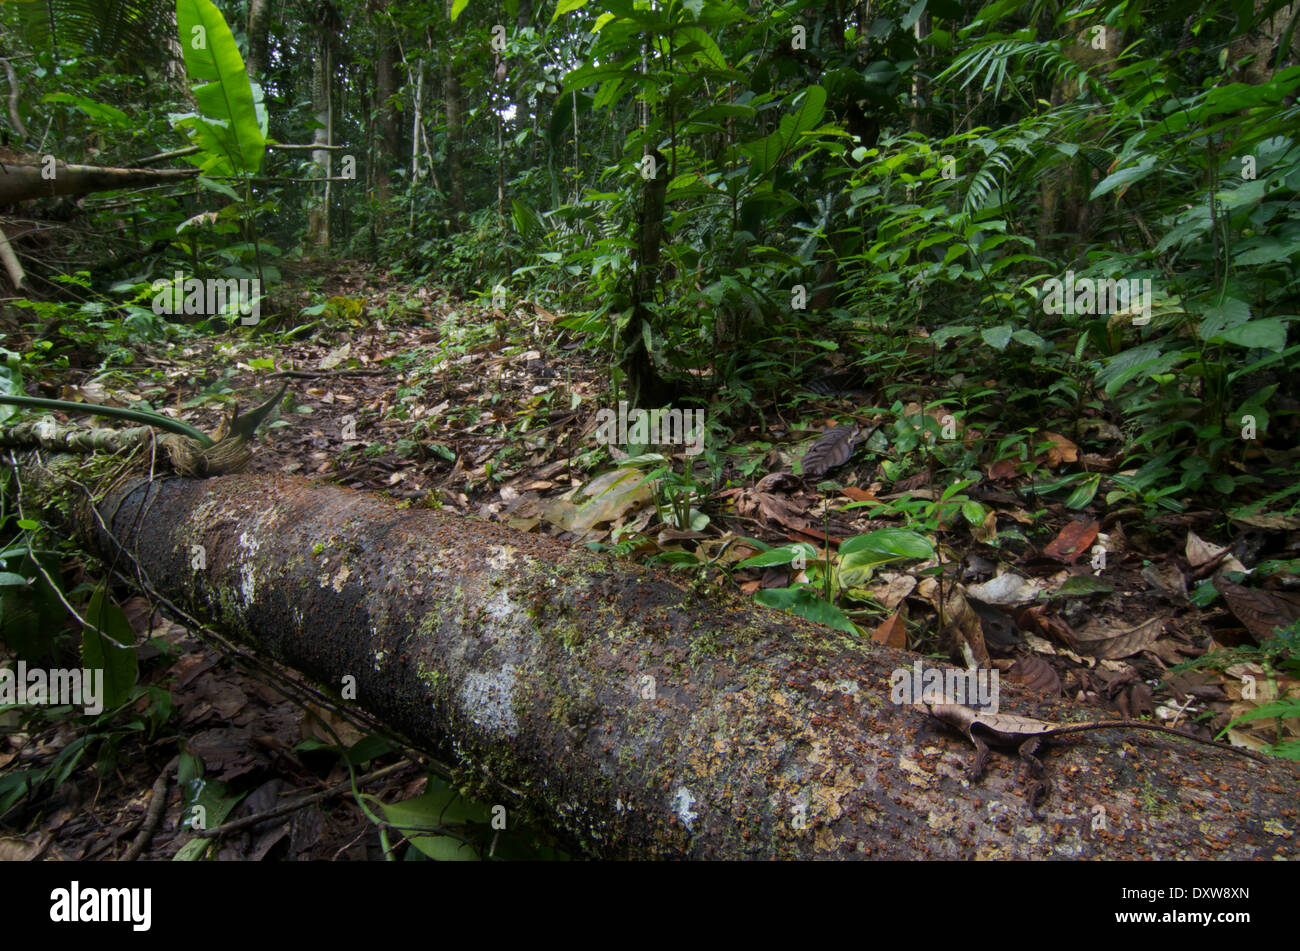 A Western Leaf Lizard (Stenocercus fimbriatus) perched on a fallen log in the Amazon basin in Peru. Stock Photo